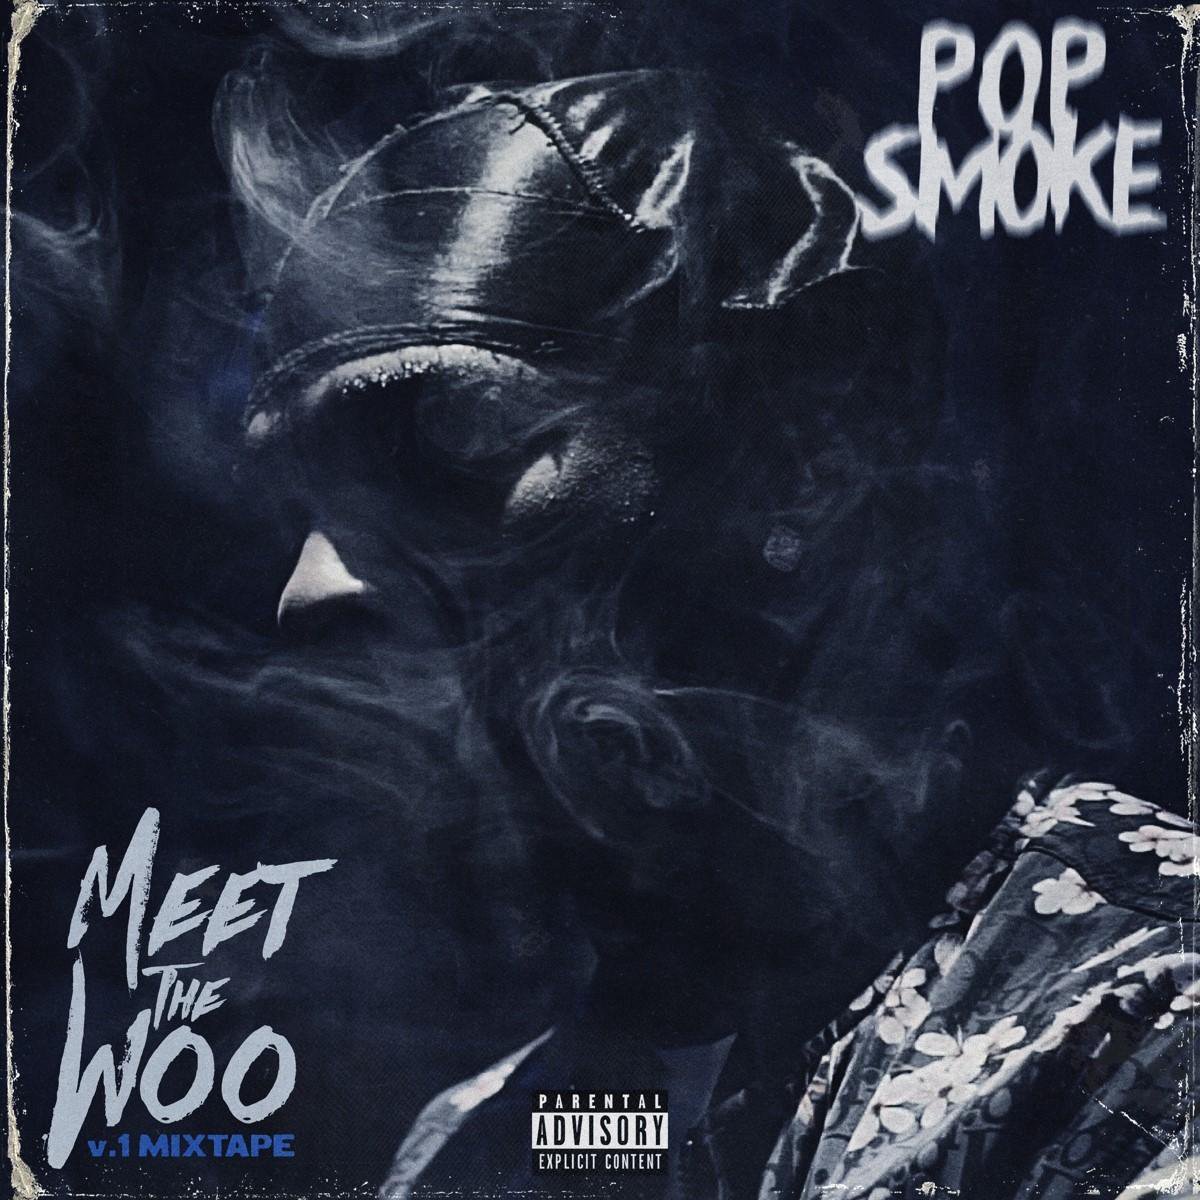 Meet the Woo | Pop Smoke image8